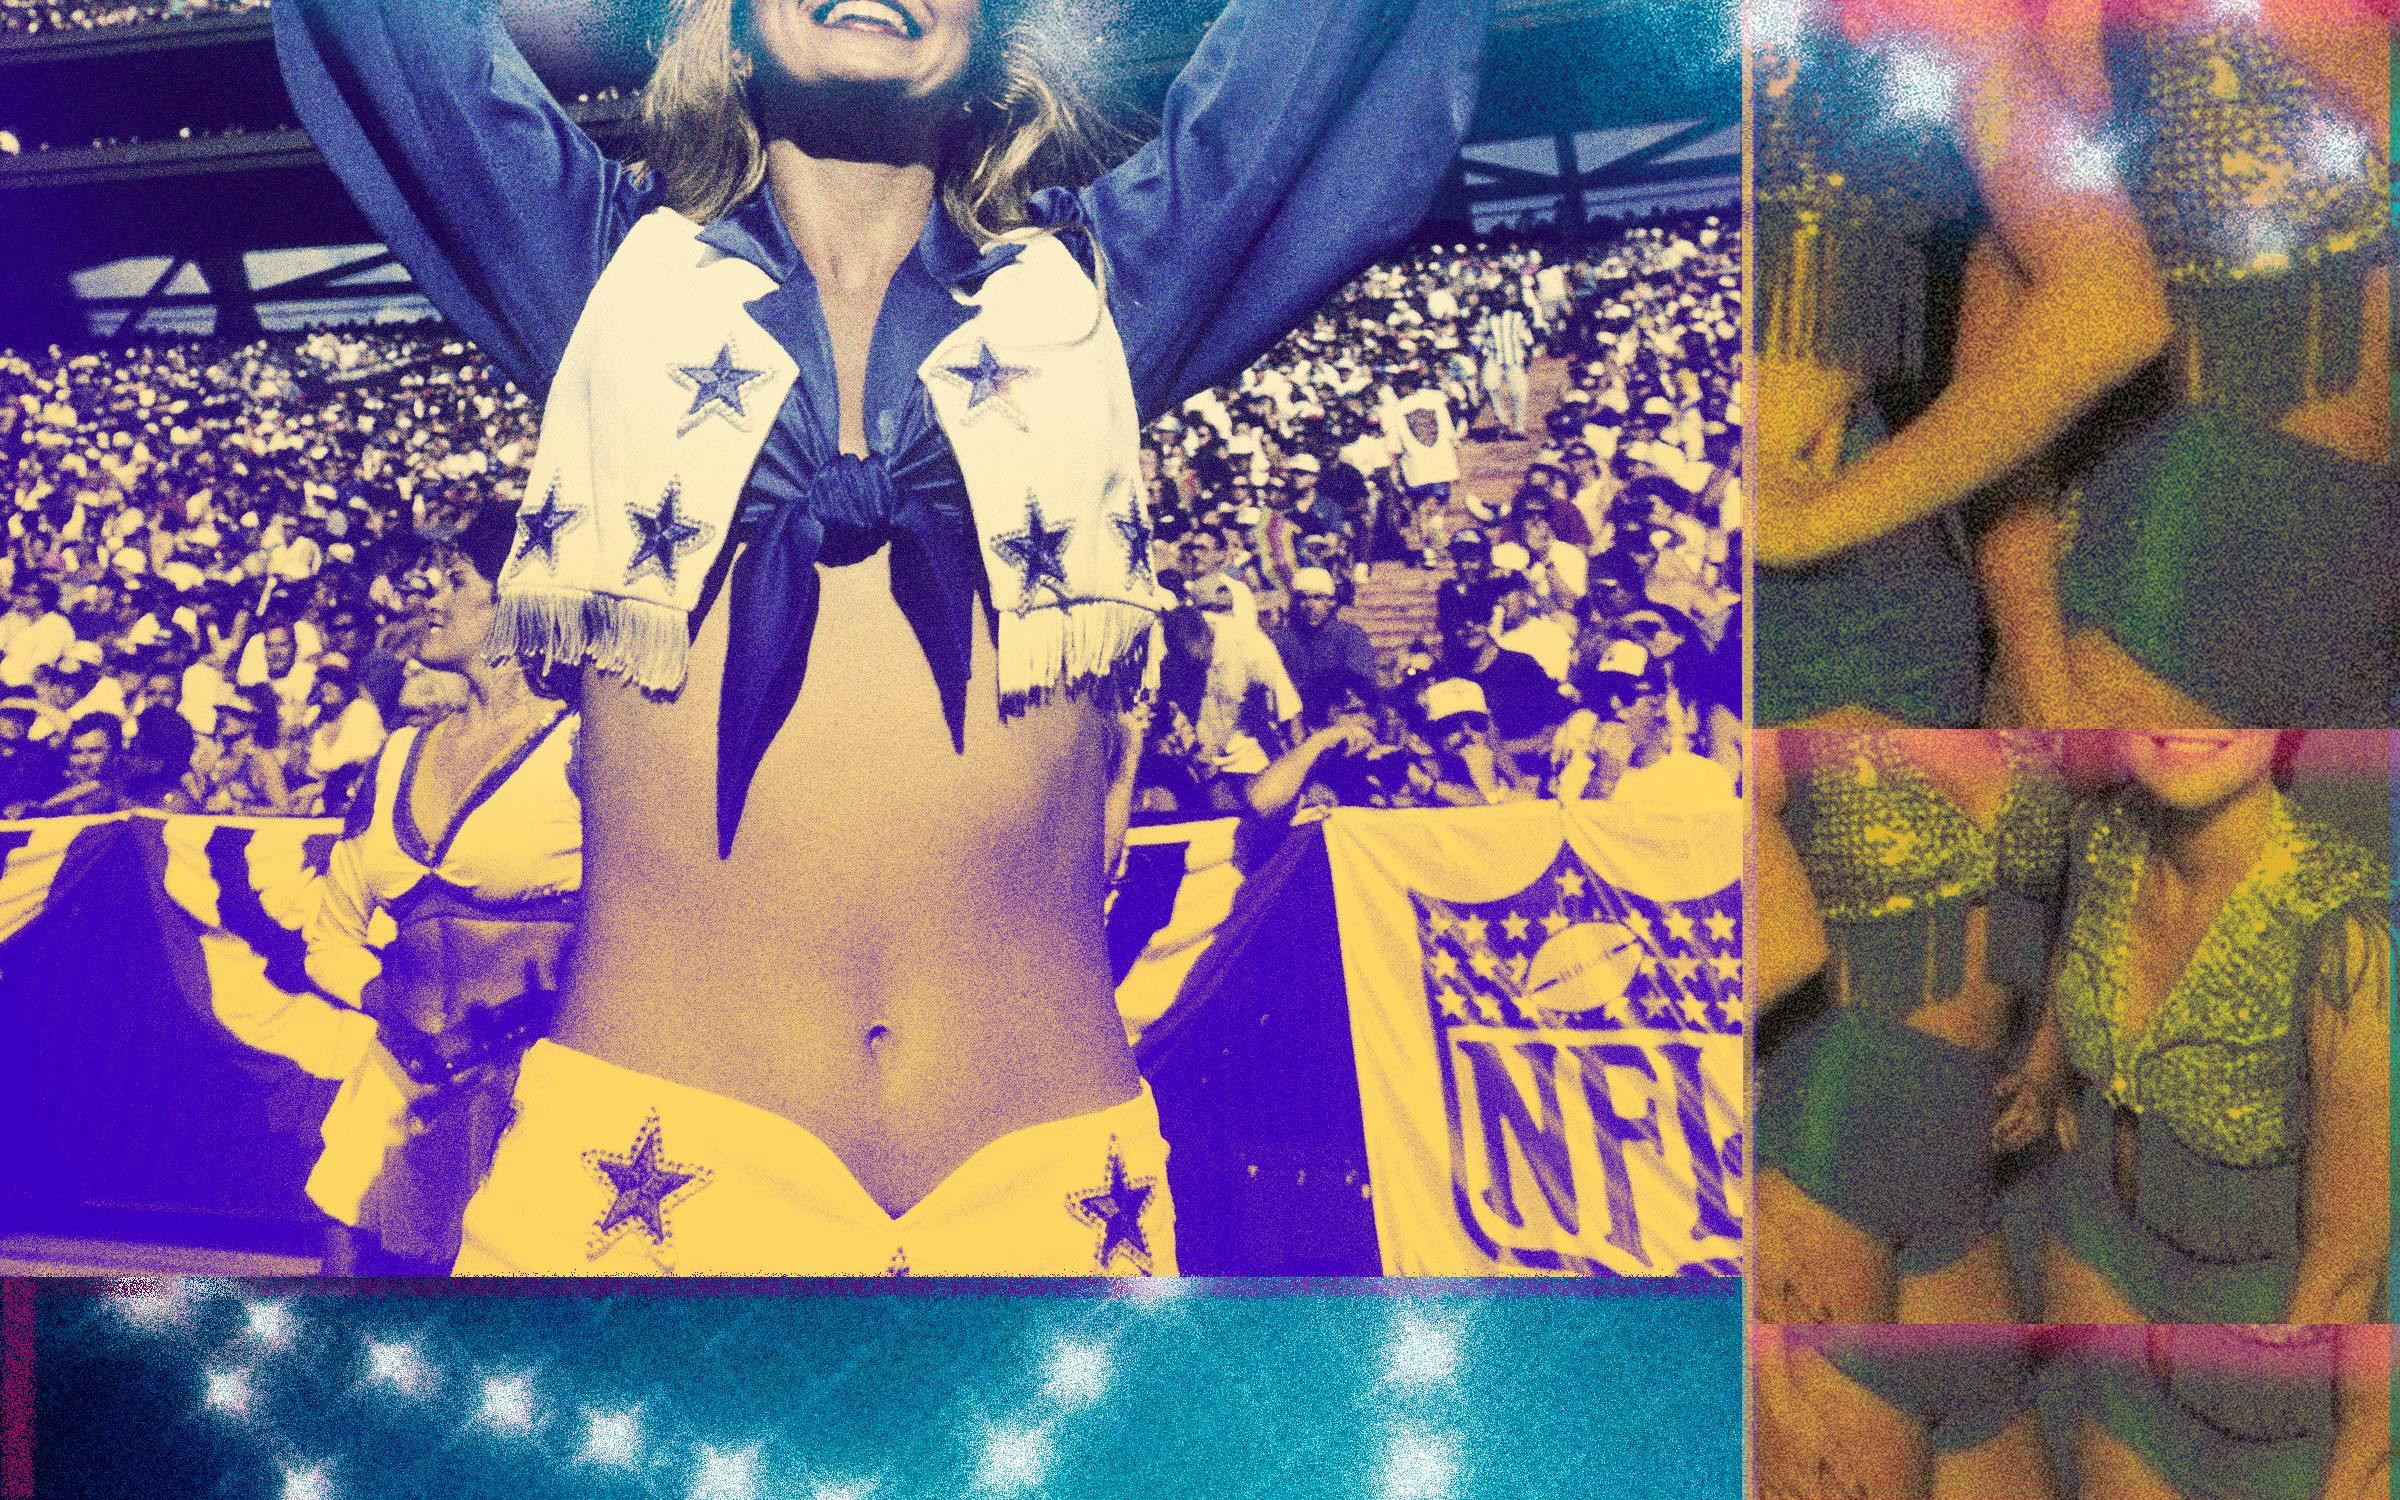 Best of Dallas cowboy cheerleaders nude pics